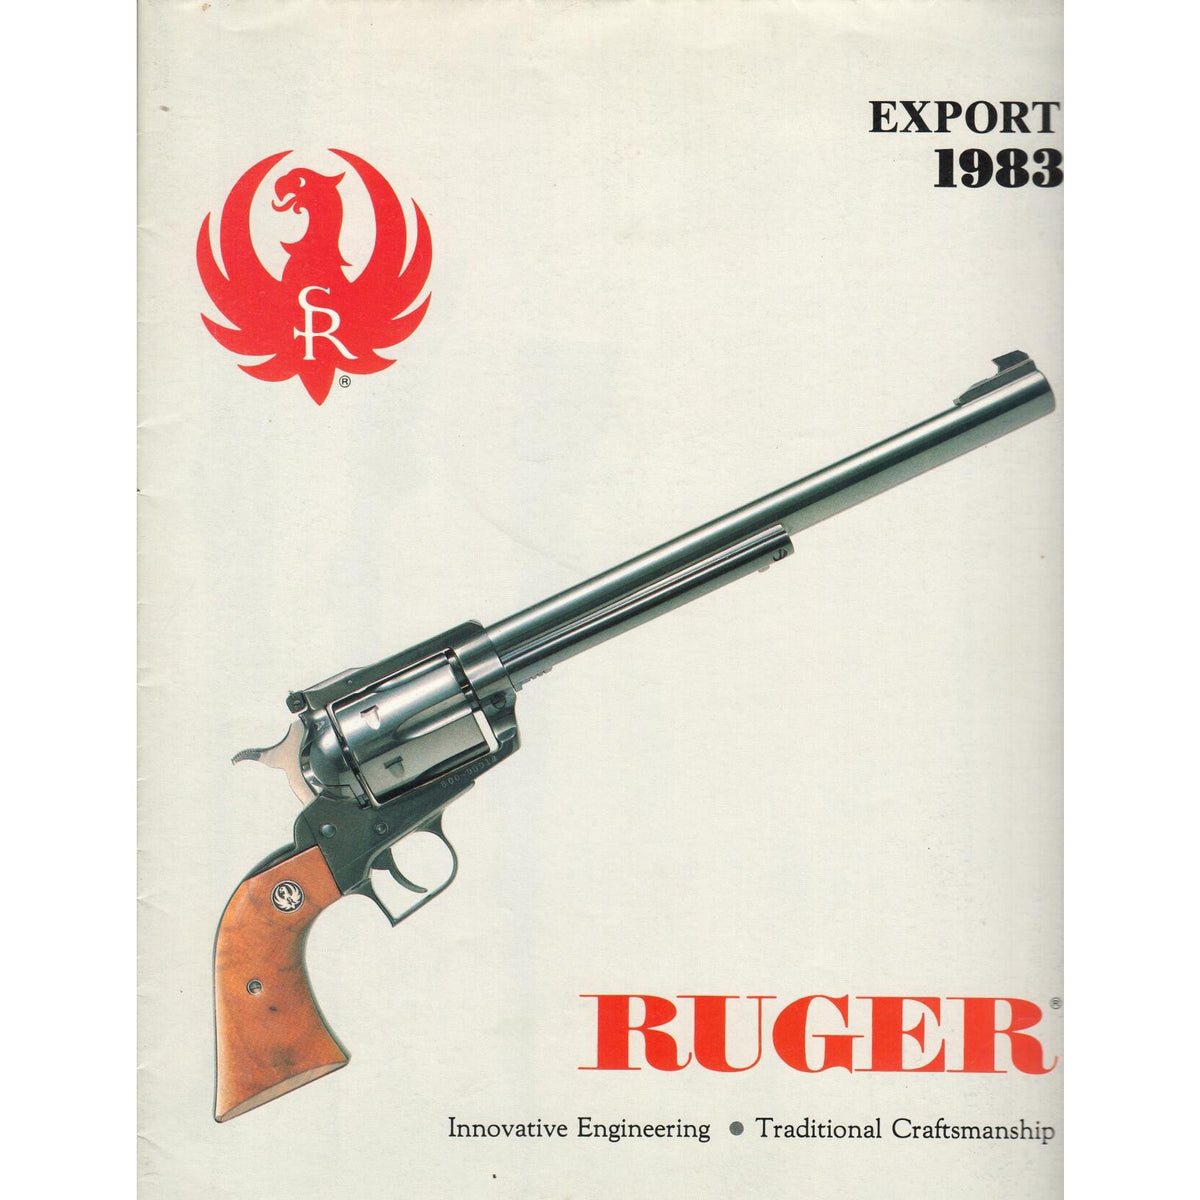 Ruger Export 1983